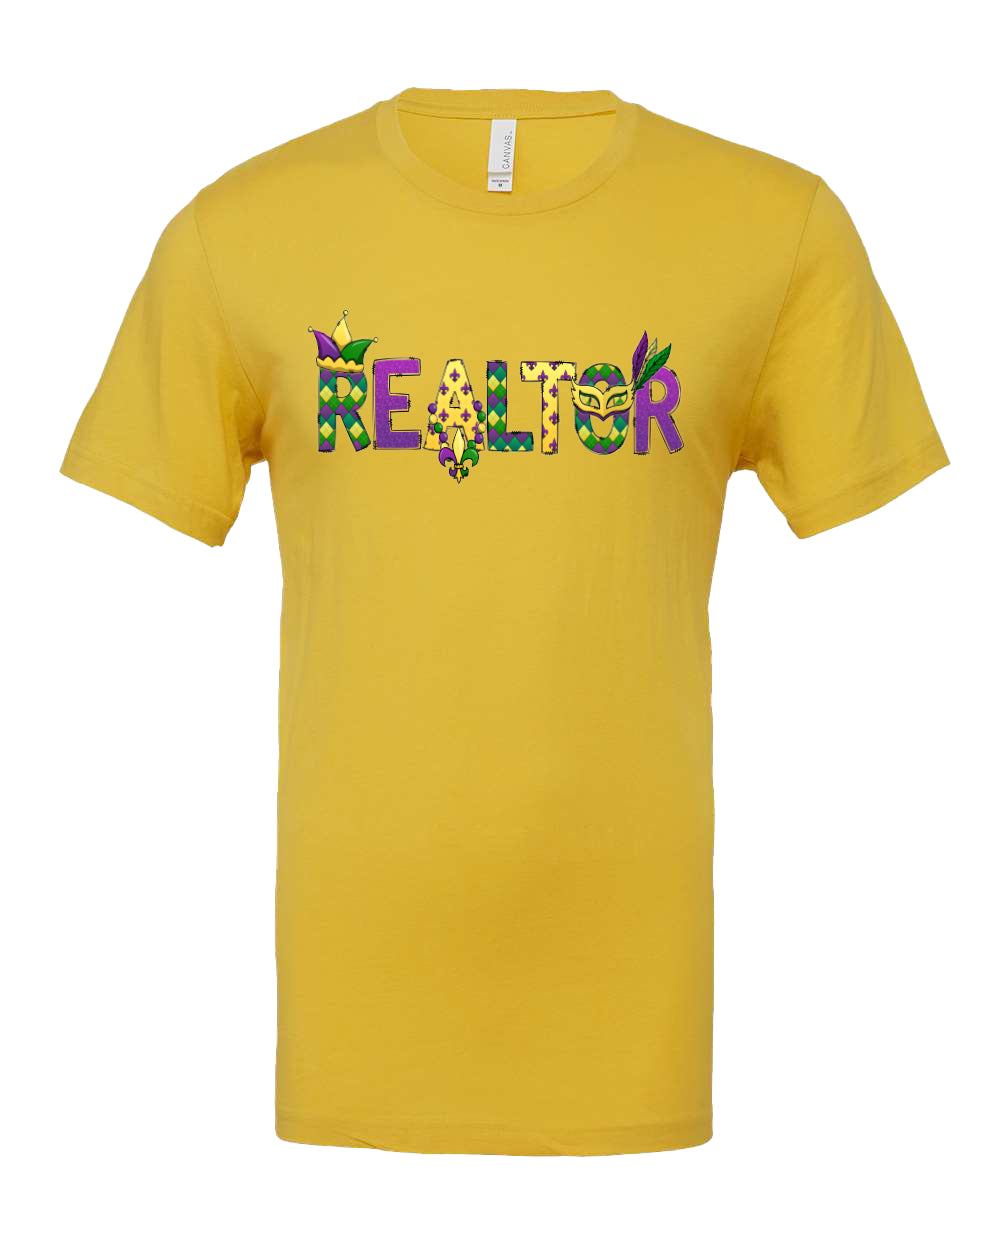 Realtor Mardi Gras T-Shirt